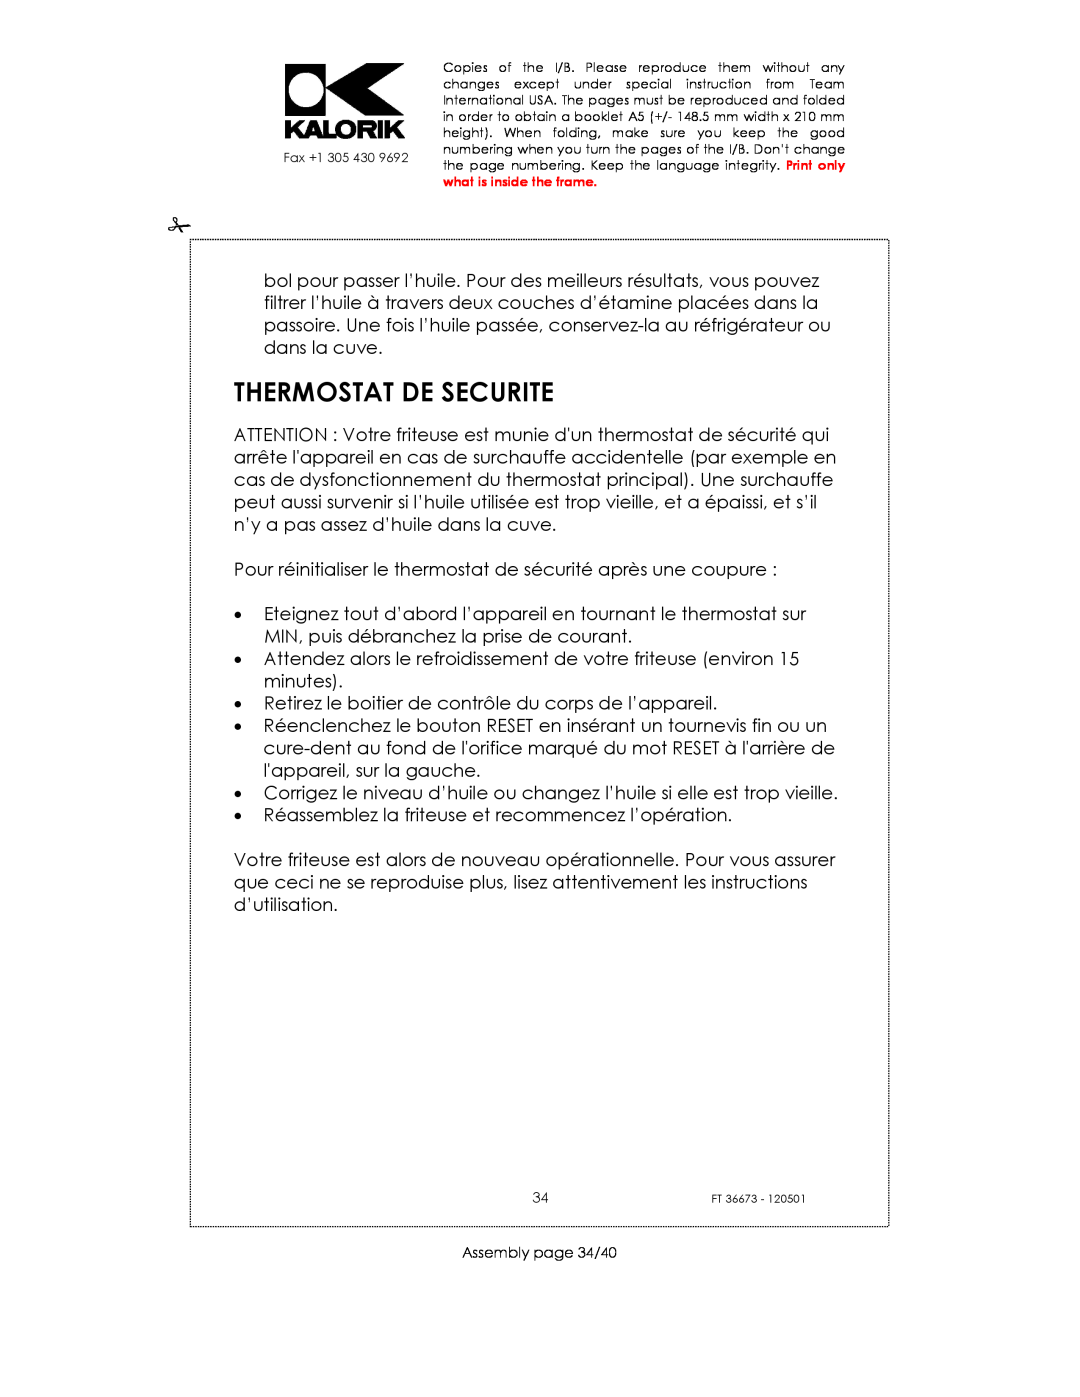 Kalorik USK FT 36673 manual Thermostat De Securite, Assembly page 34/40 